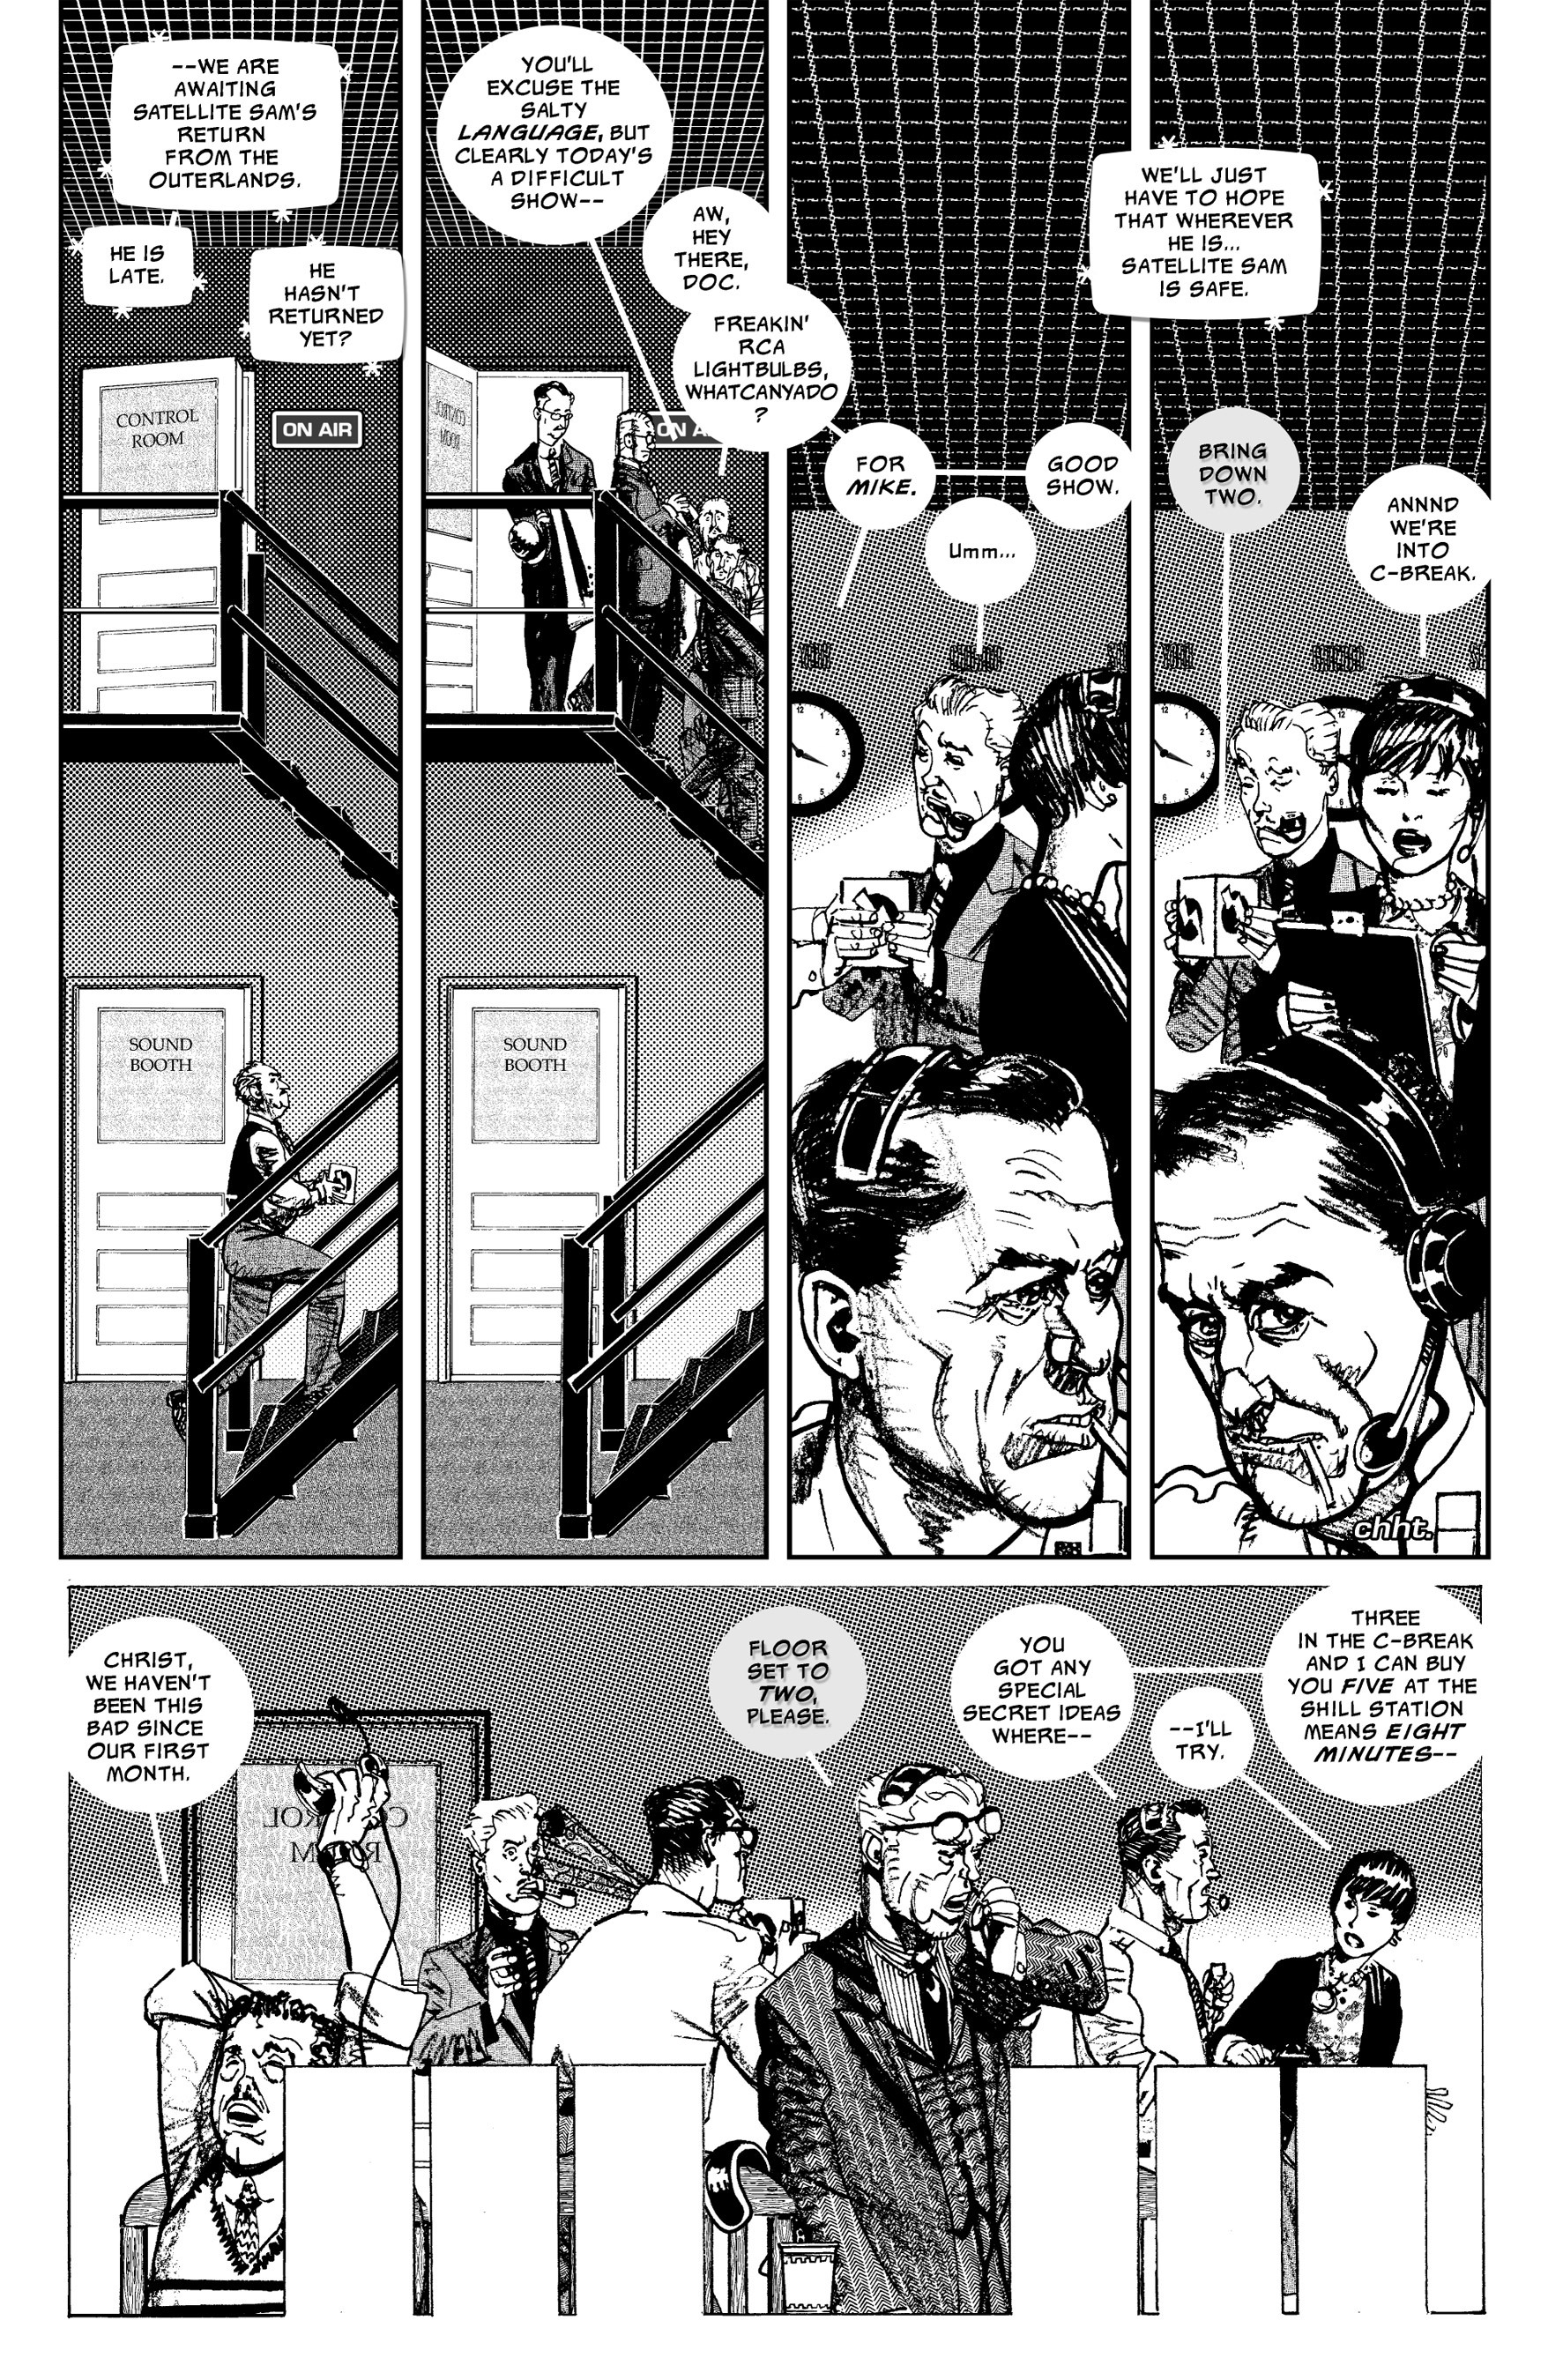 Read online Satellite Sam comic -  Issue #1 - 9